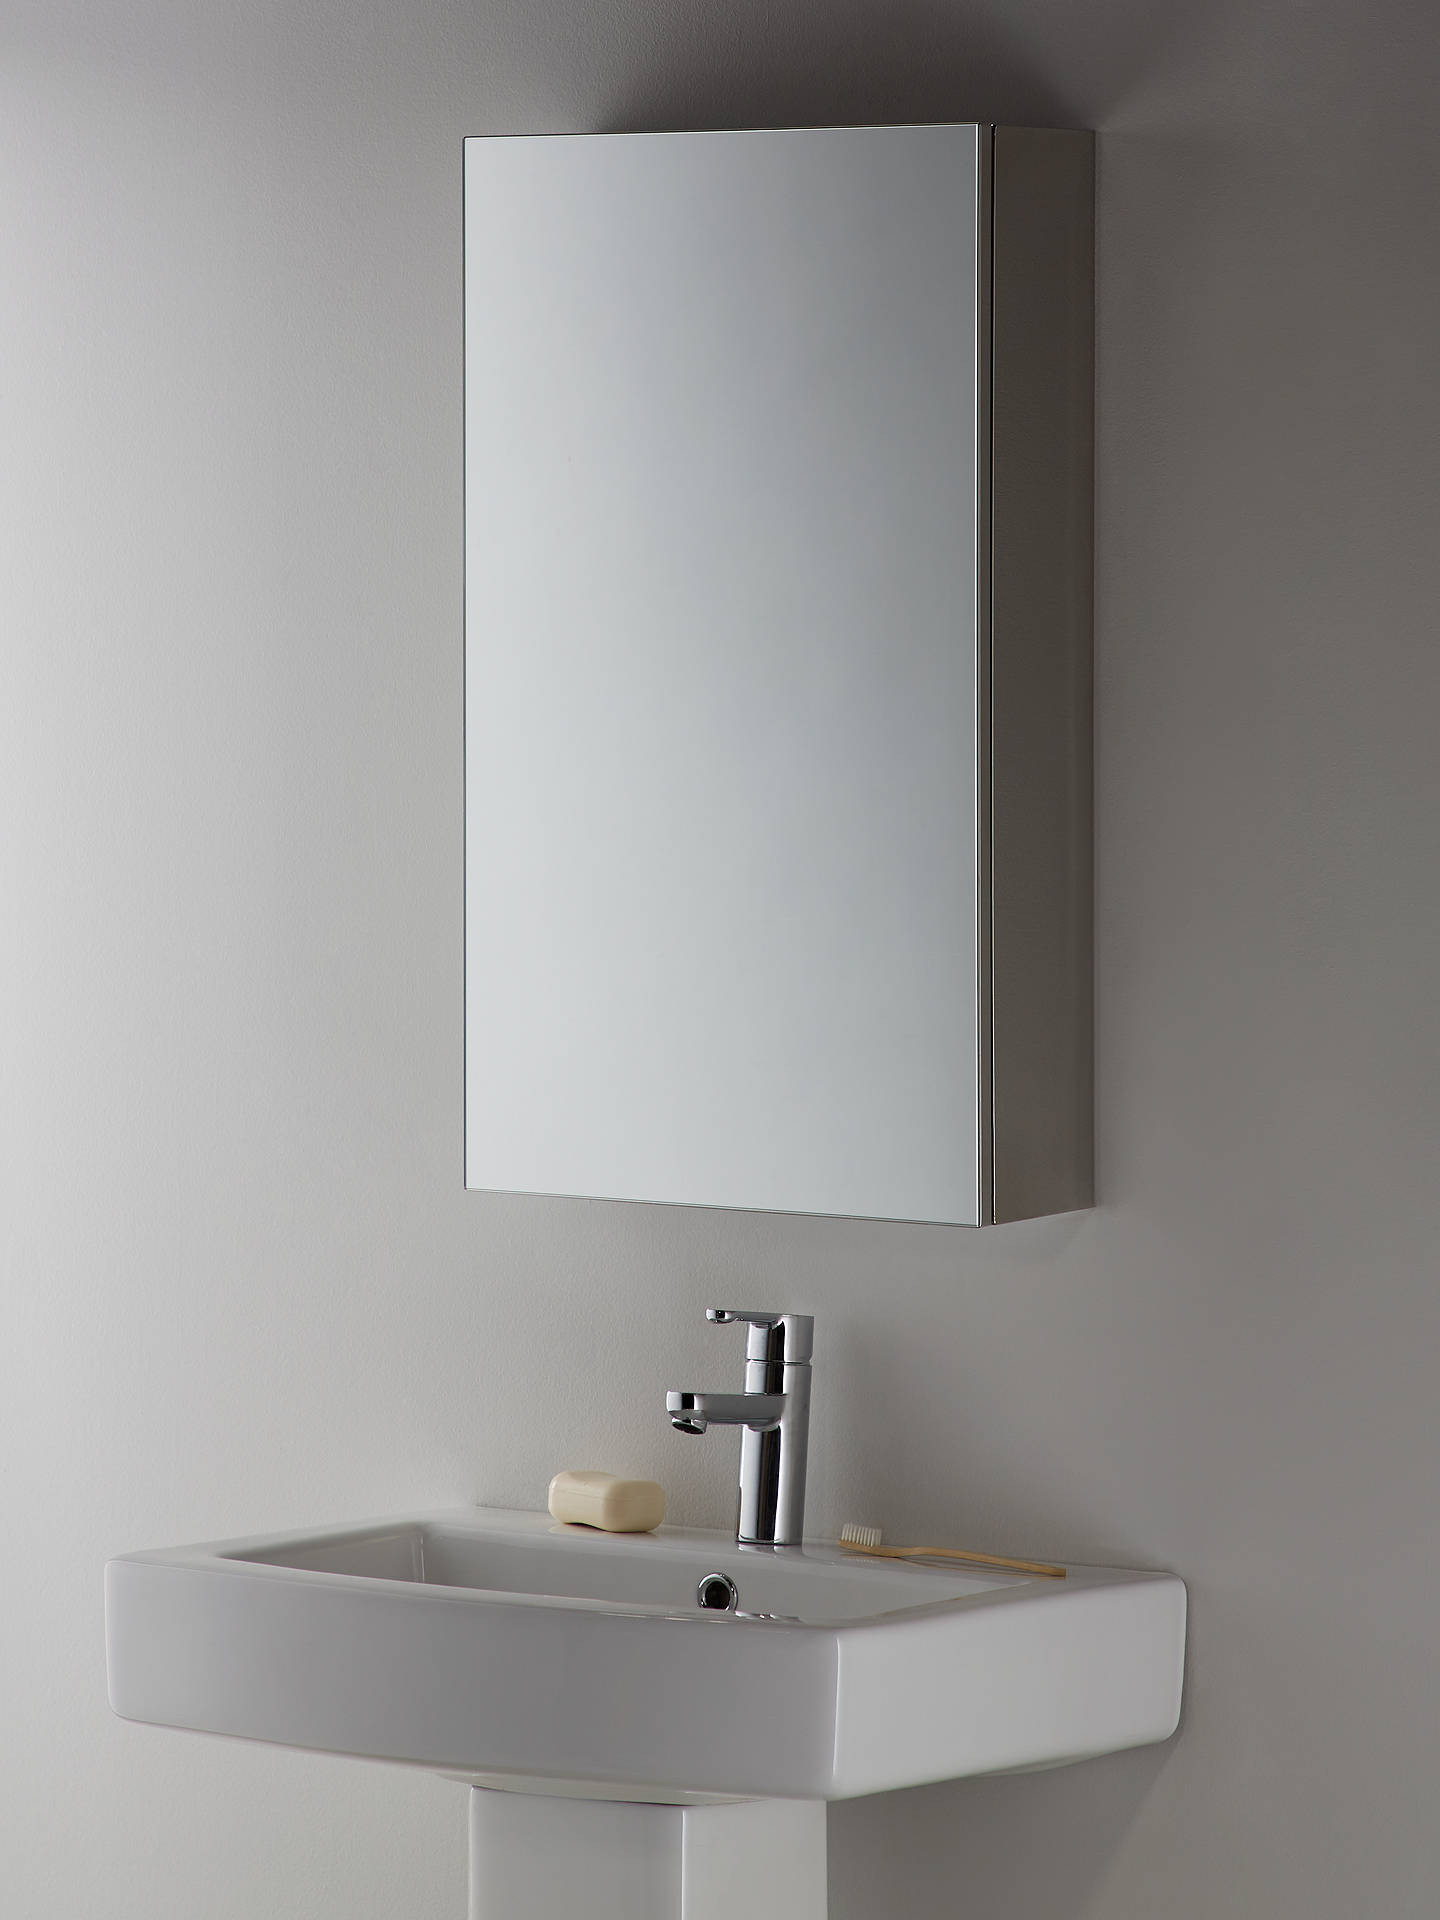 Bathroom Cabinet Mirrors
 John Lewis & Partners Single Mirrored Bathroom Cabinet